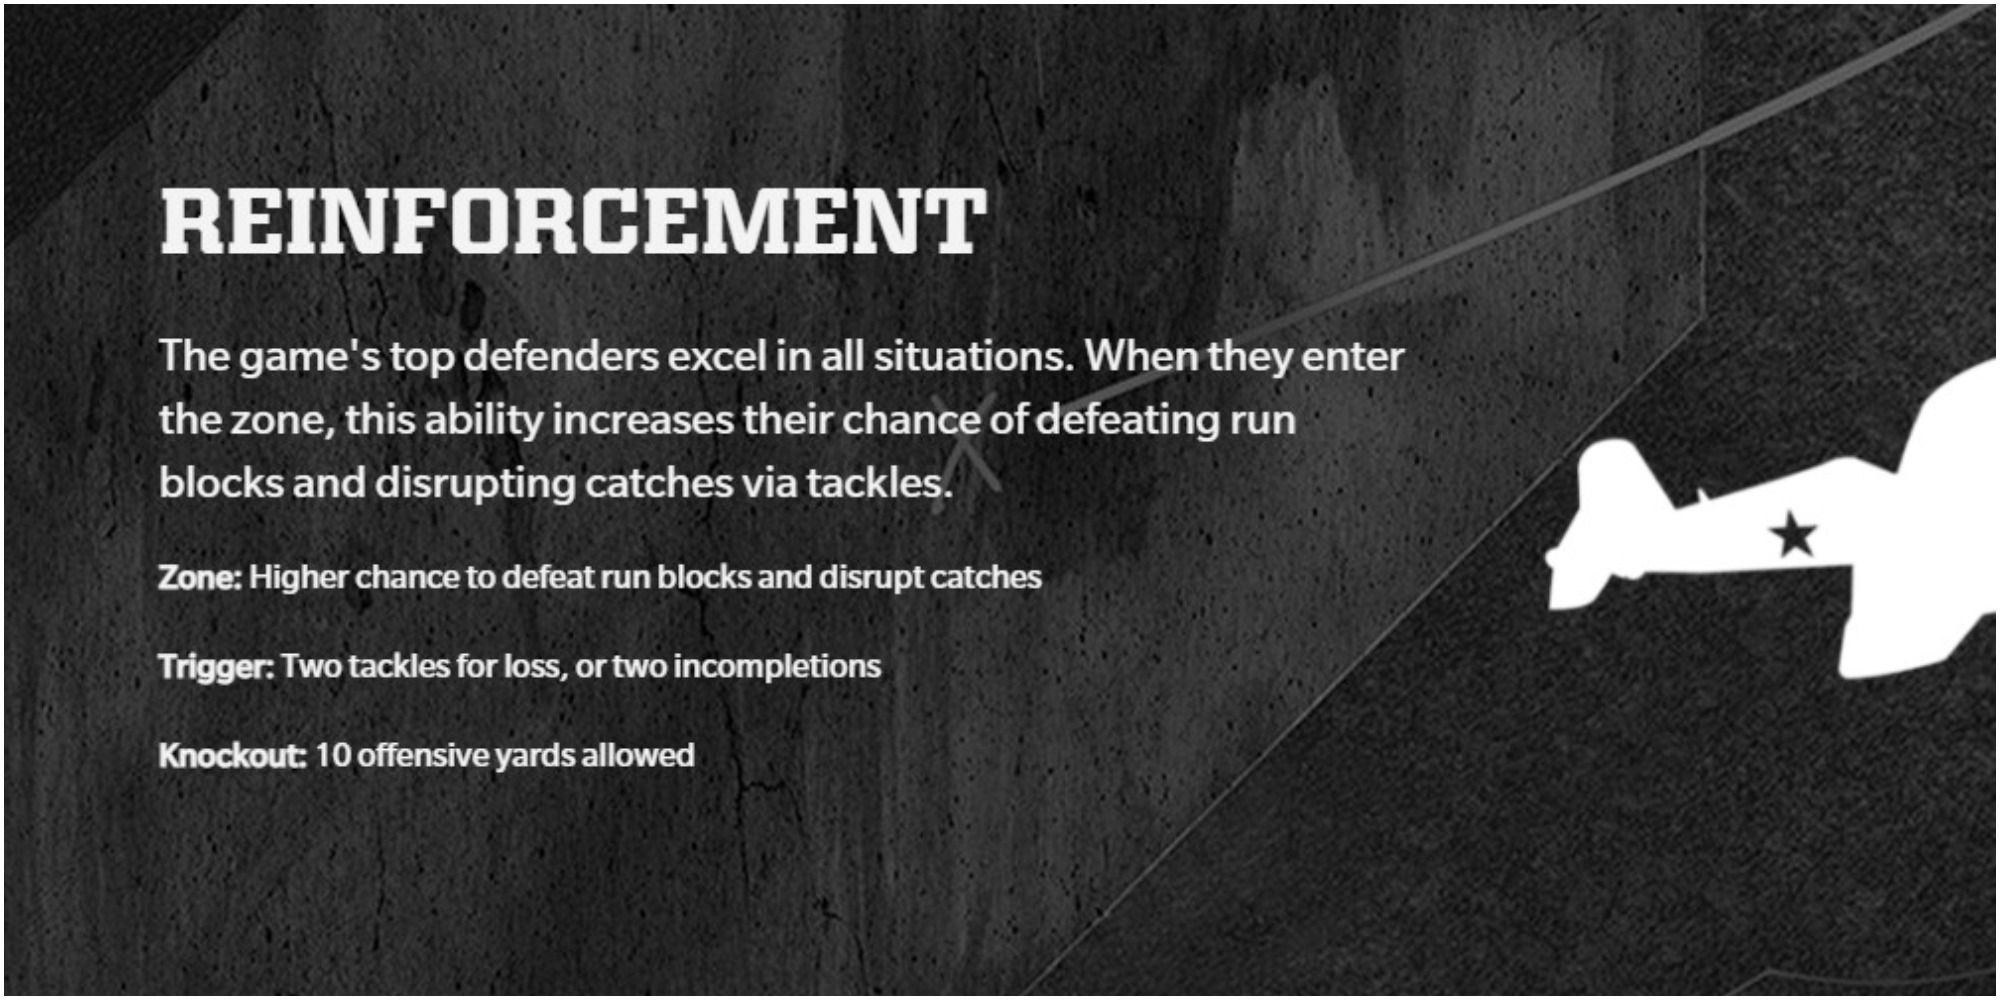 Madden NFL 22 Reinforcement Description On The Website